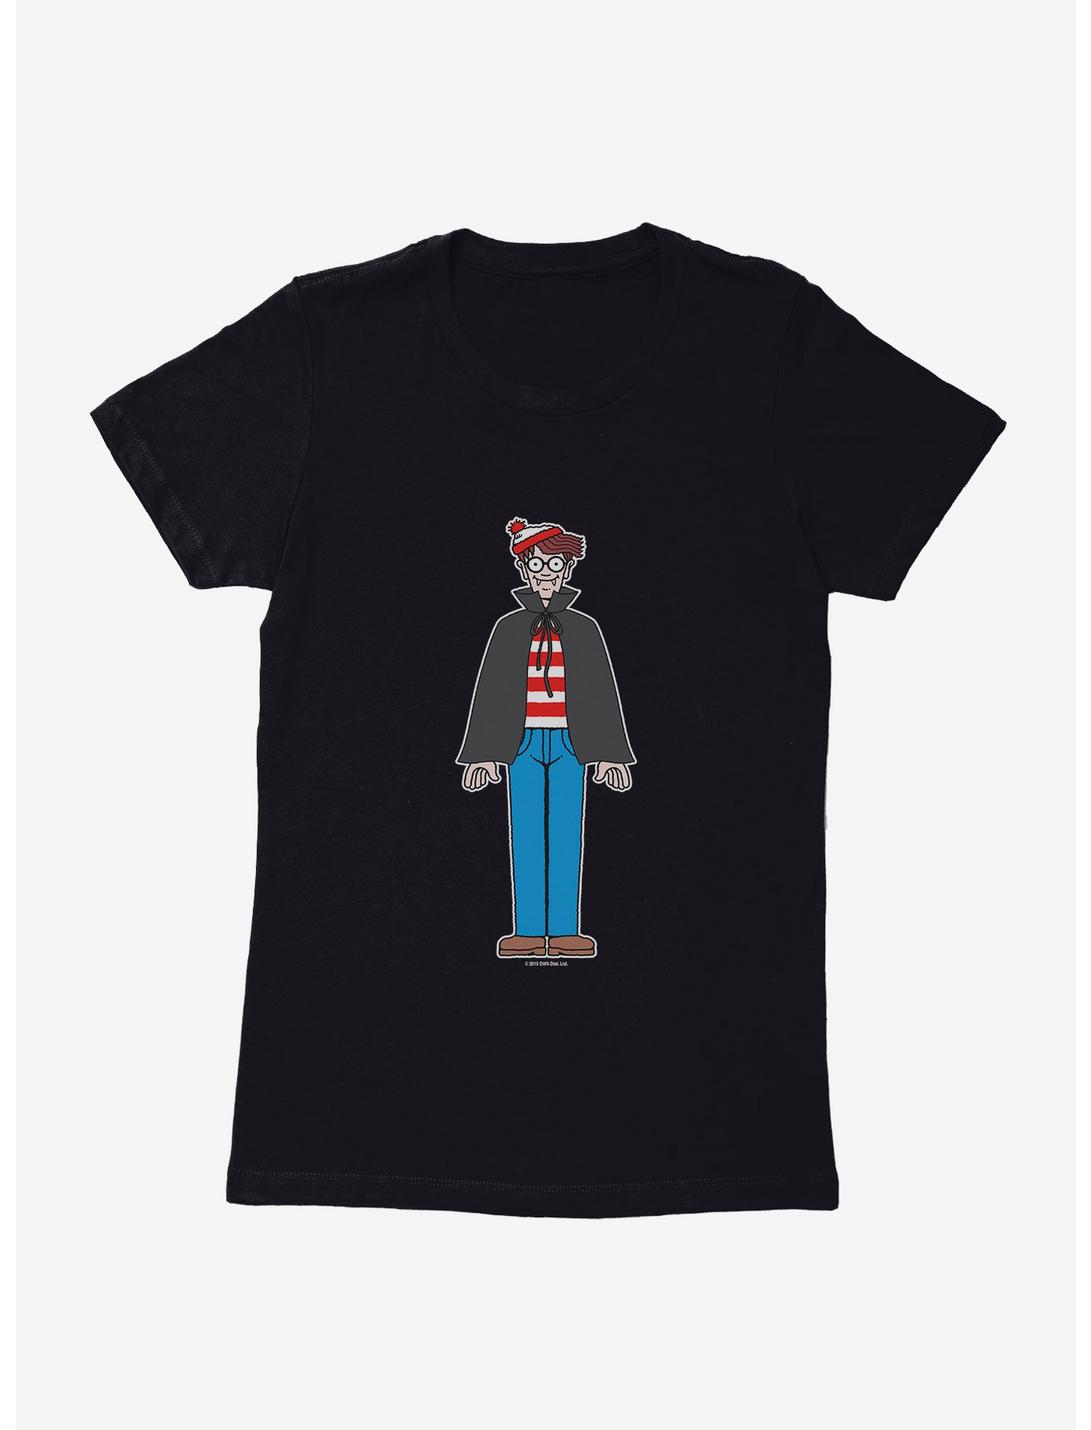 Where's Waldo Vampire Womens T-Shirt, BLACK, hi-res